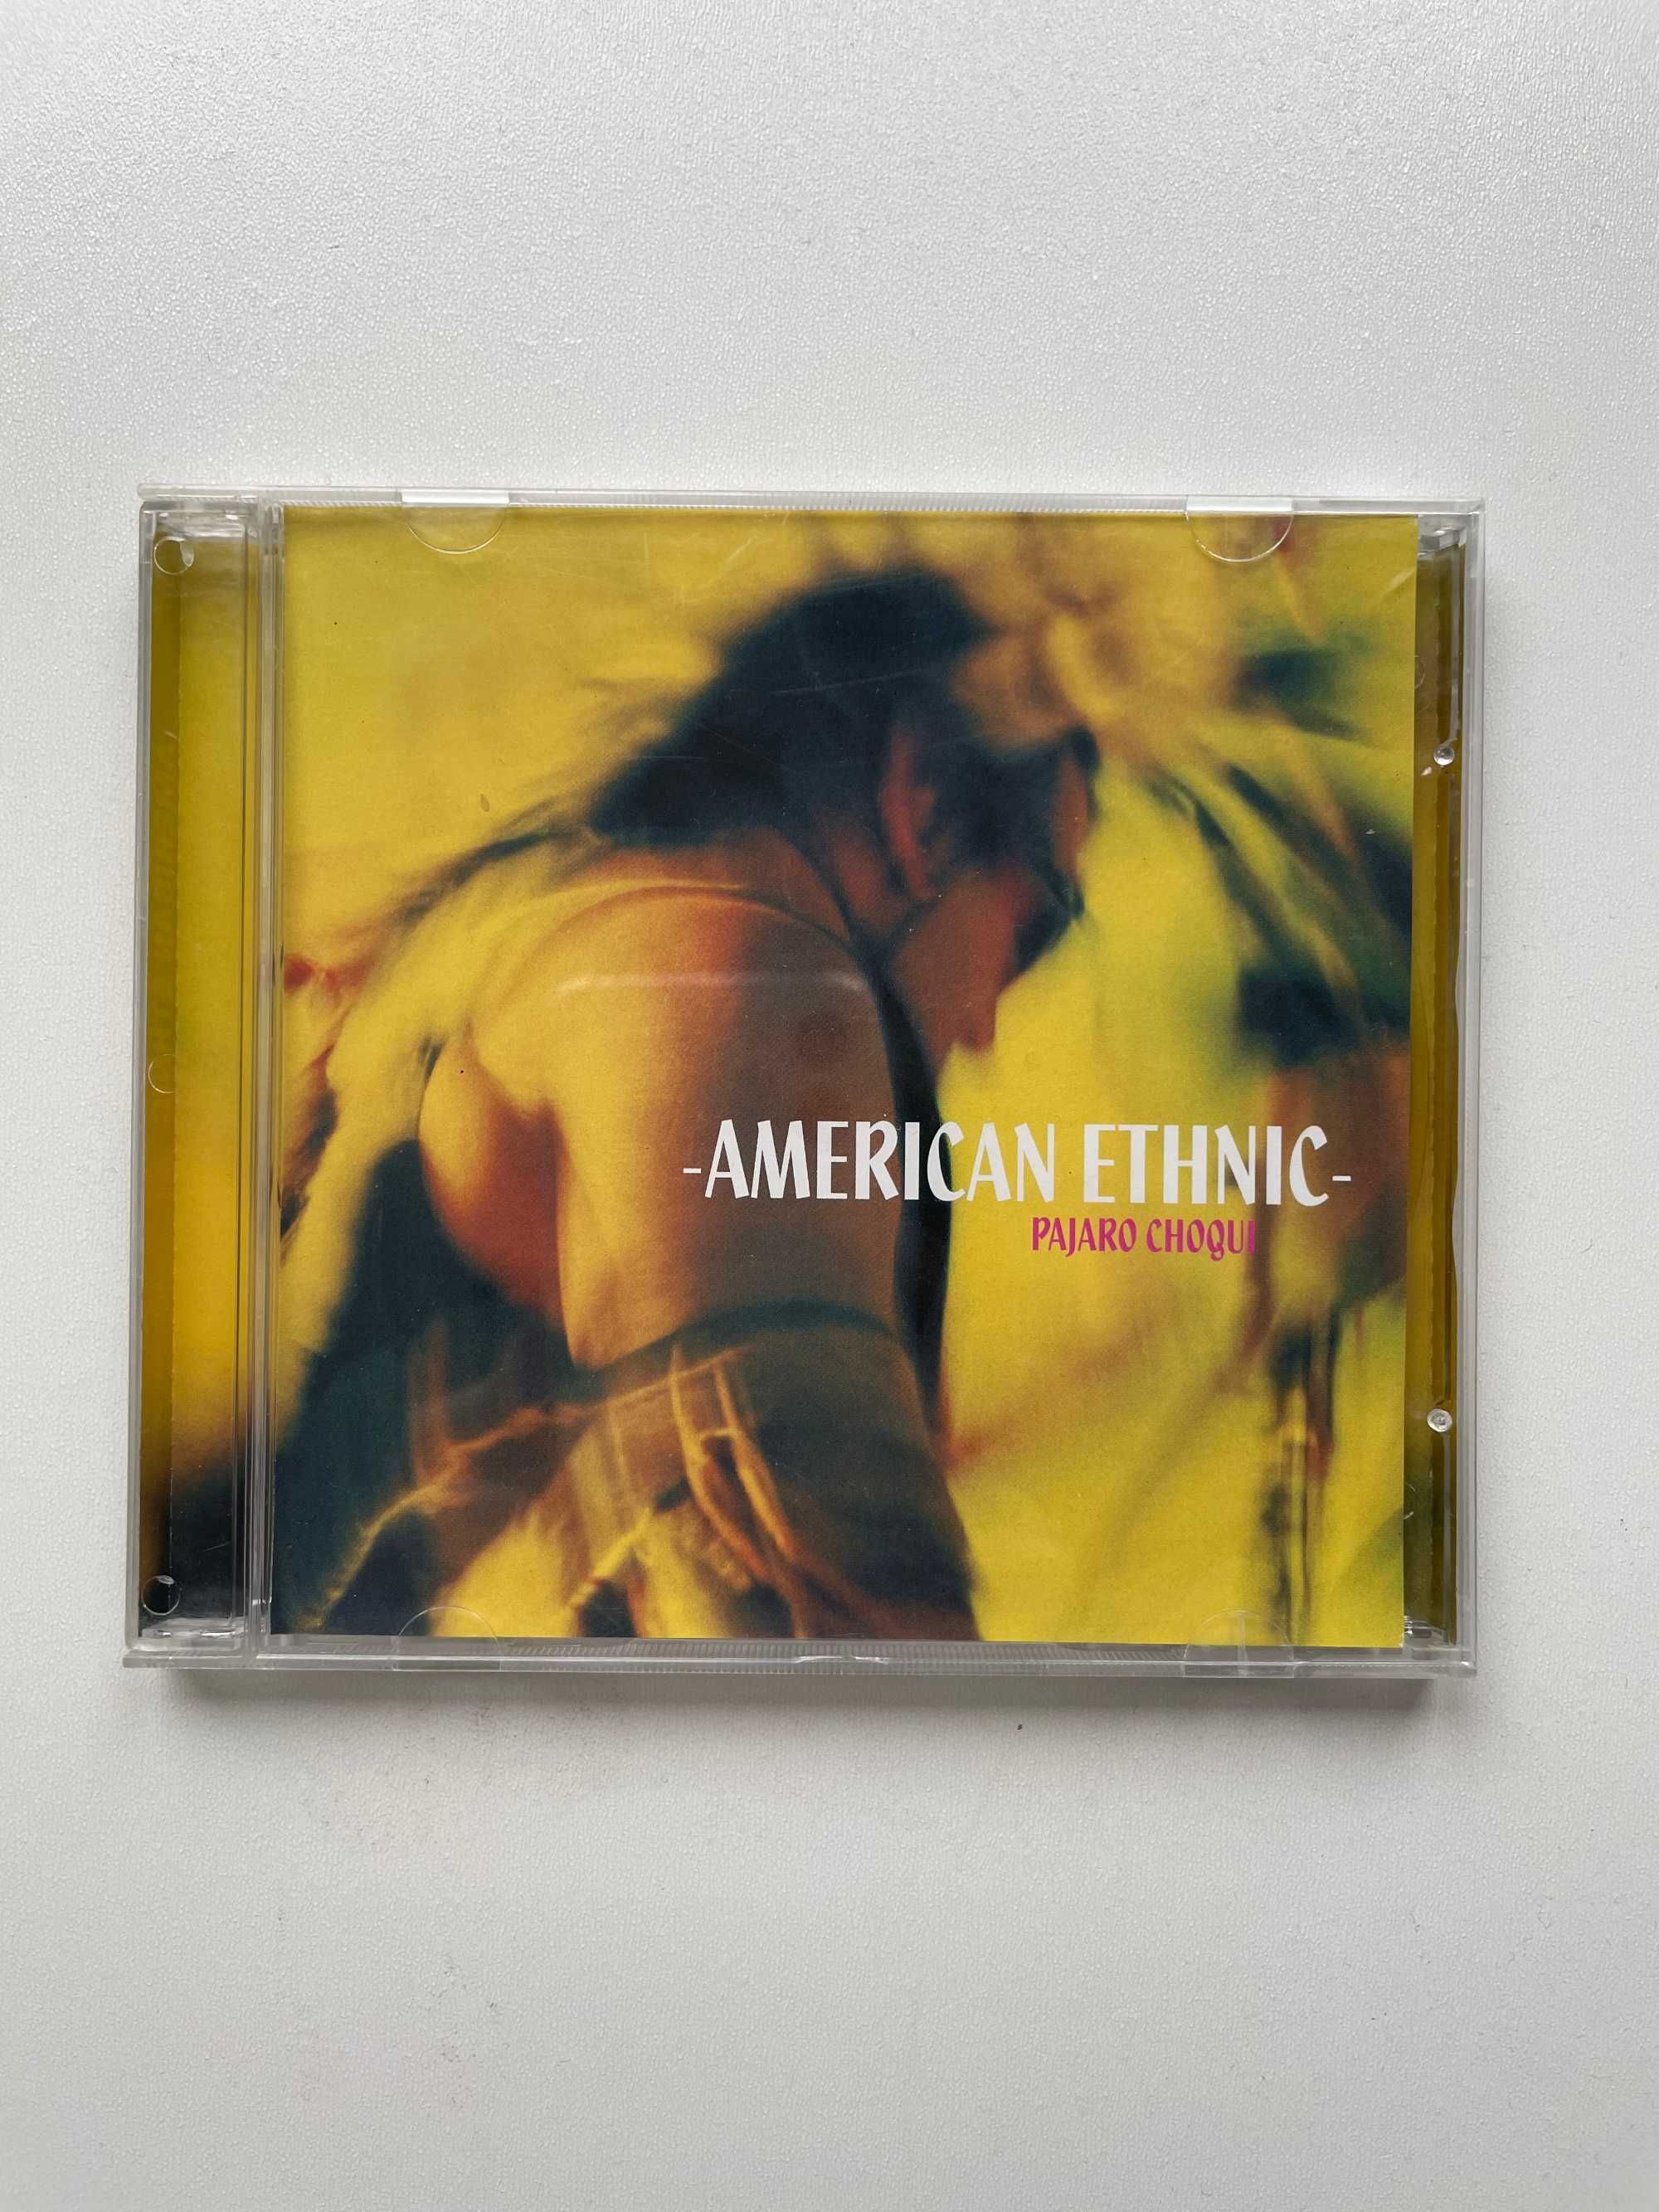 American Ethnic - Pajaro ChoquiI CD